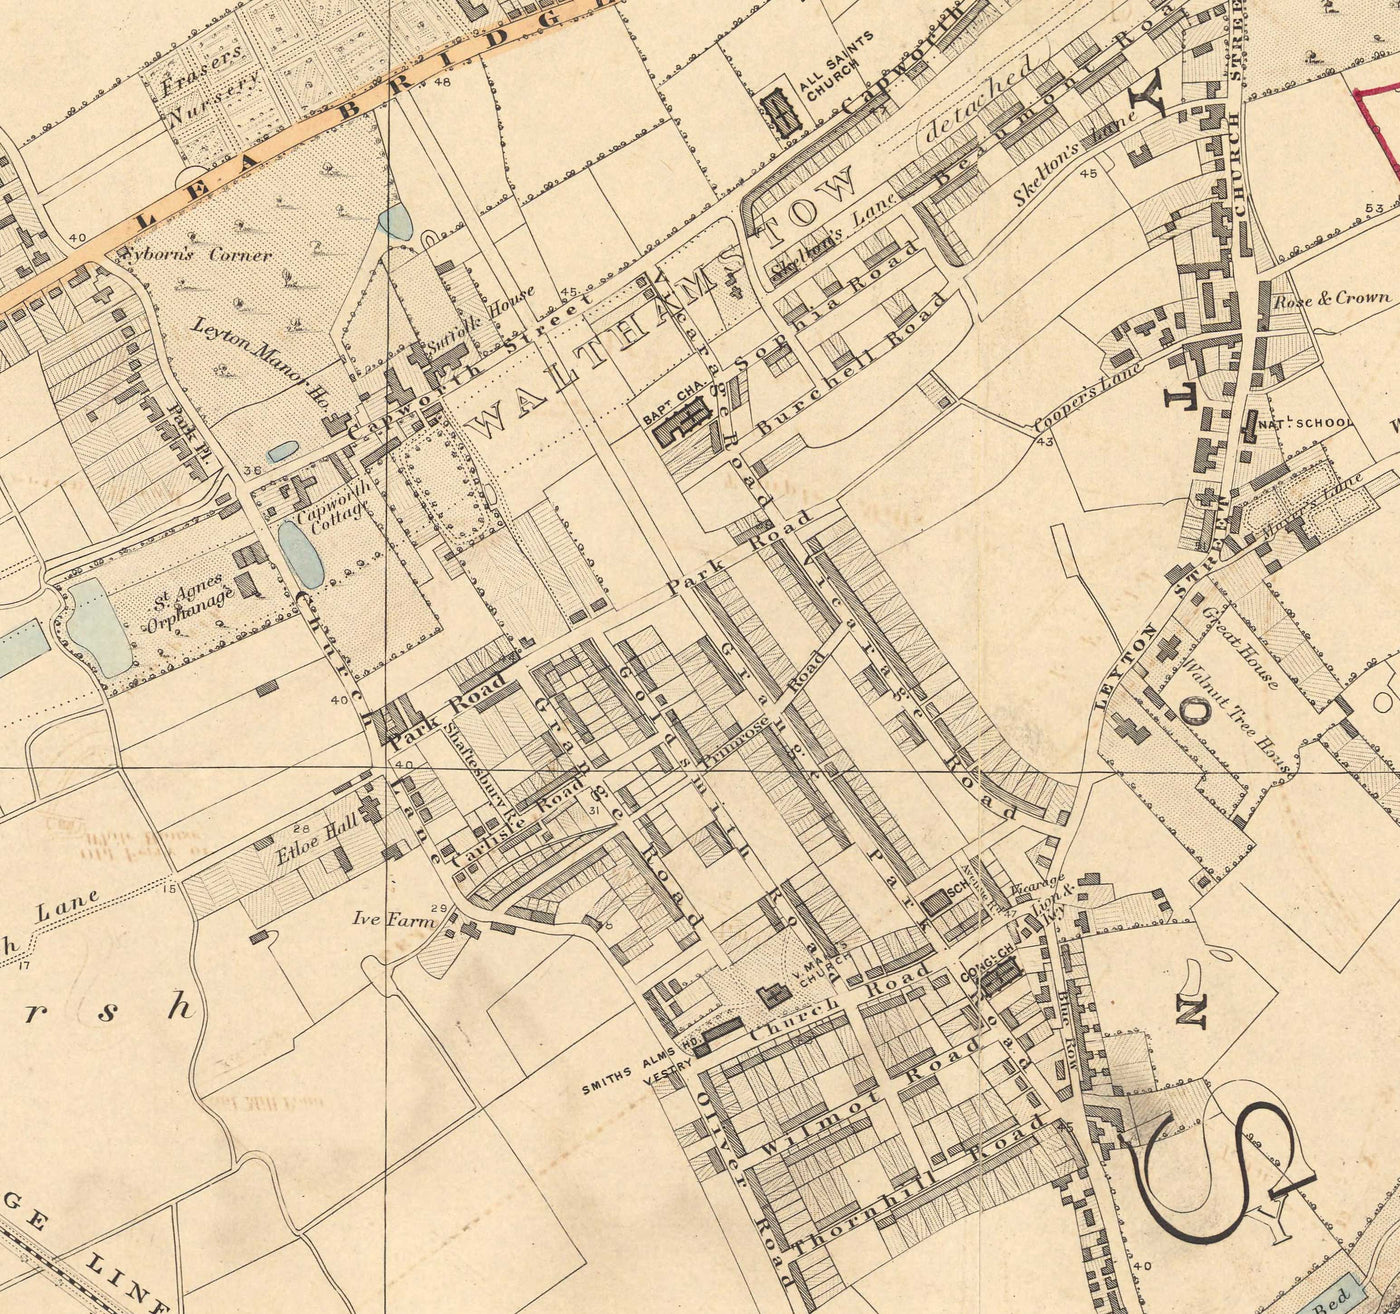 Alte Farbkarte von Nordost-London, 1891 - Walthamstow, Leyton, Wanstead, Leytonstone, Lea - E5, E10, E11, E17